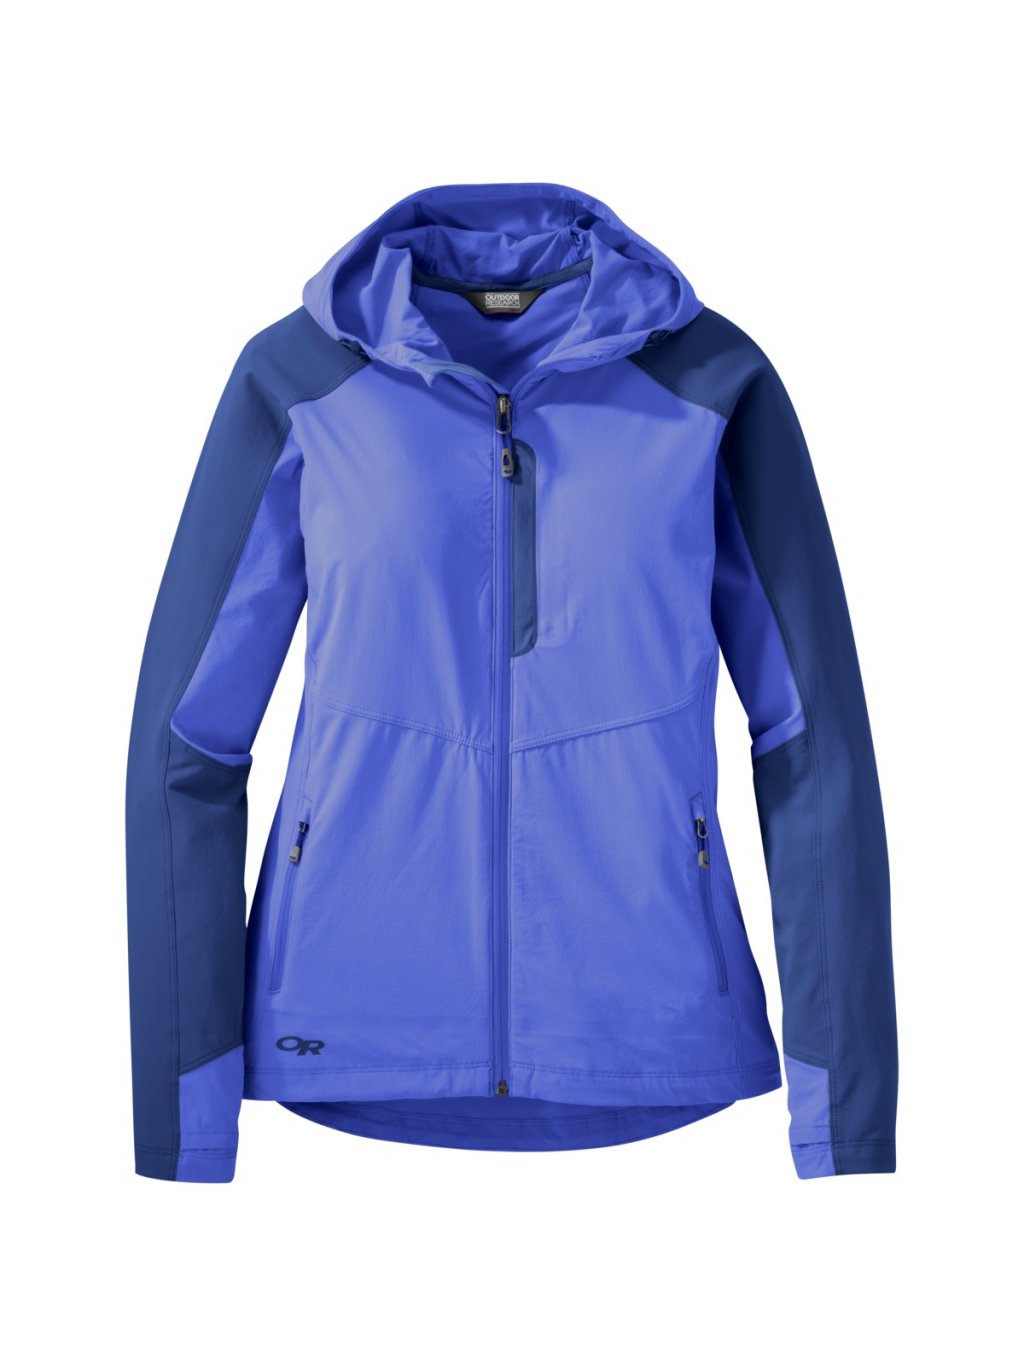 Outdoor Research Women's Ferrosi Hooded Jacket, Batik/Baltic (velikost XS)